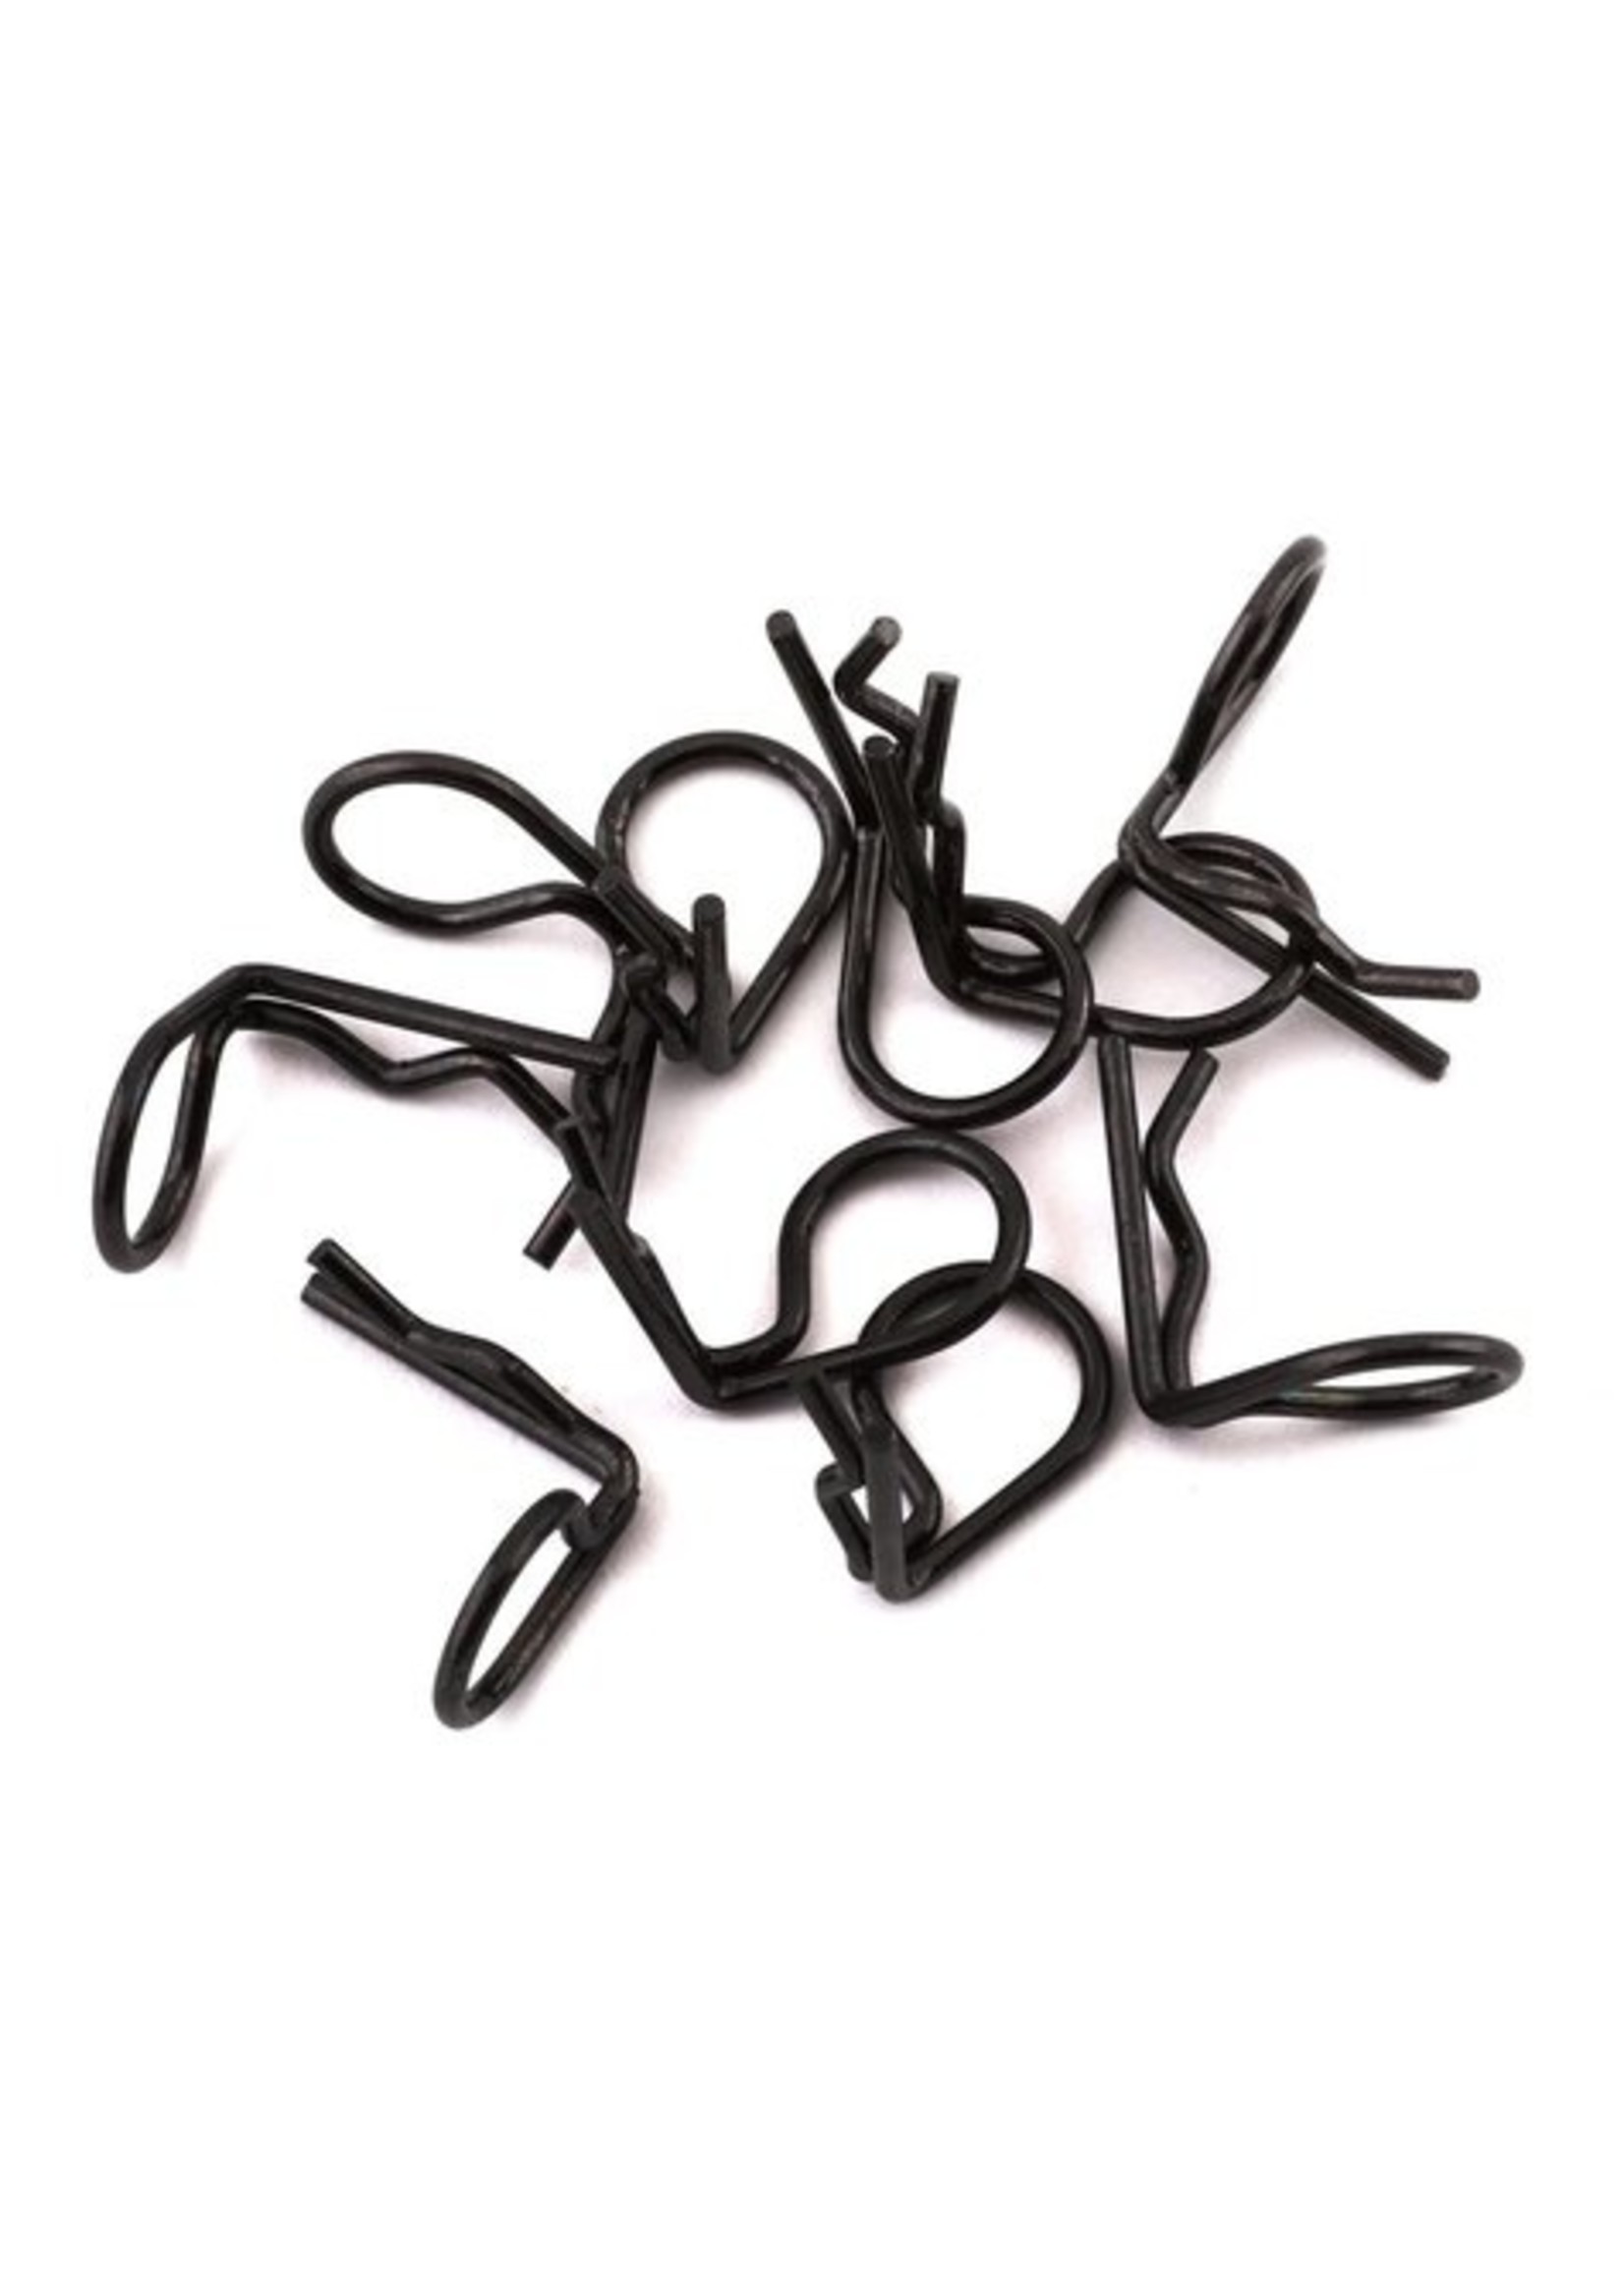 Traxxas TRA3935A Traxxas Body clip (mounting clip), angled, 90-degrees (black) (10)